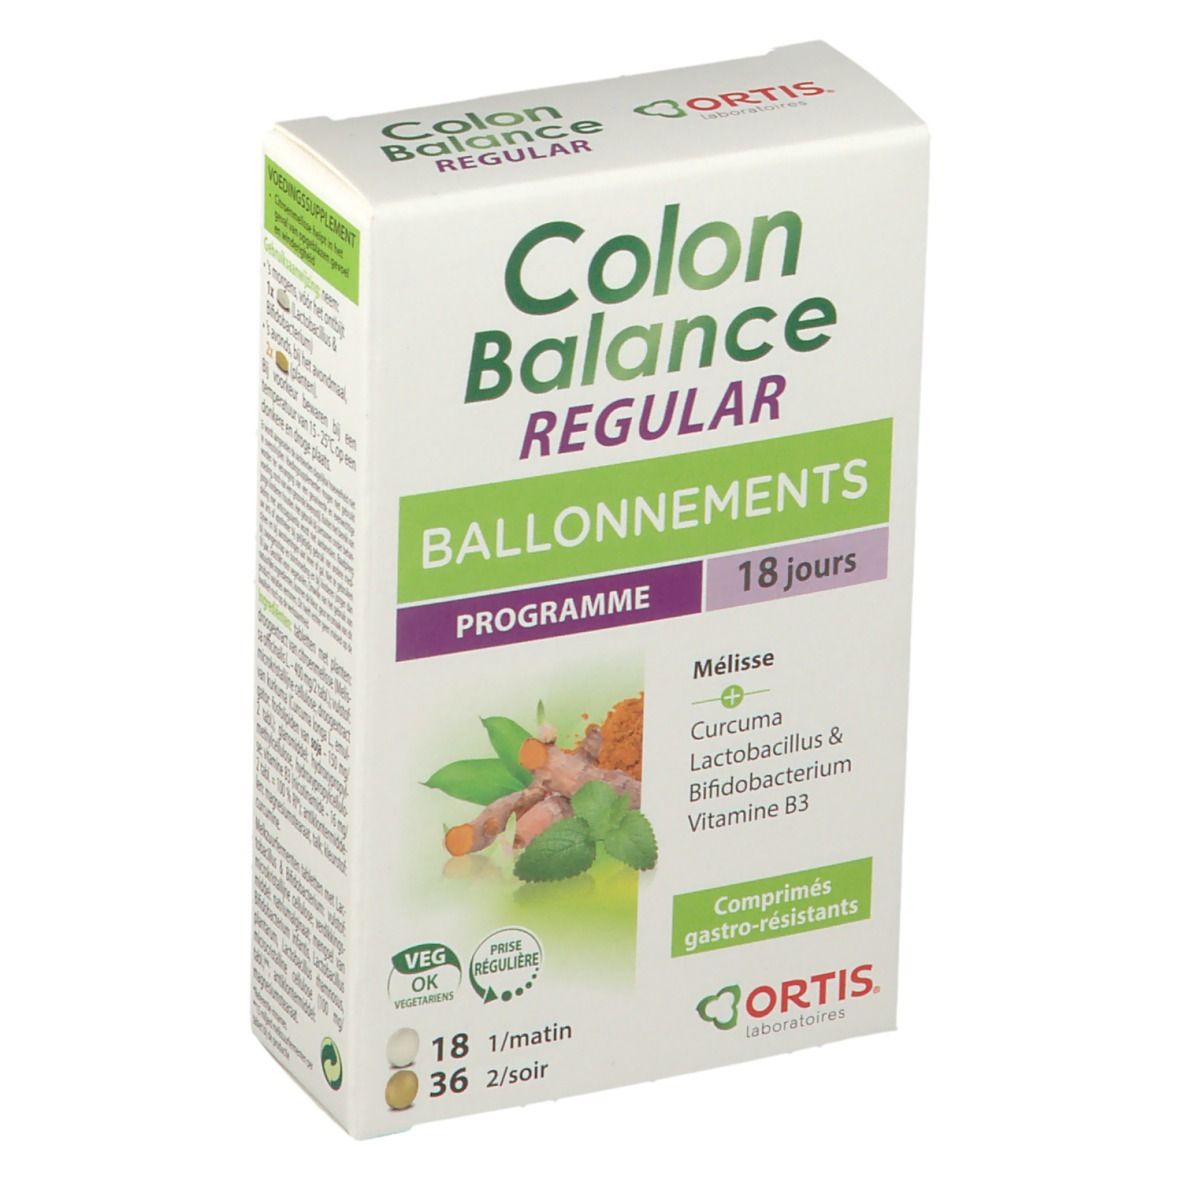 Ortis® Colon Balance Regular Ballonements